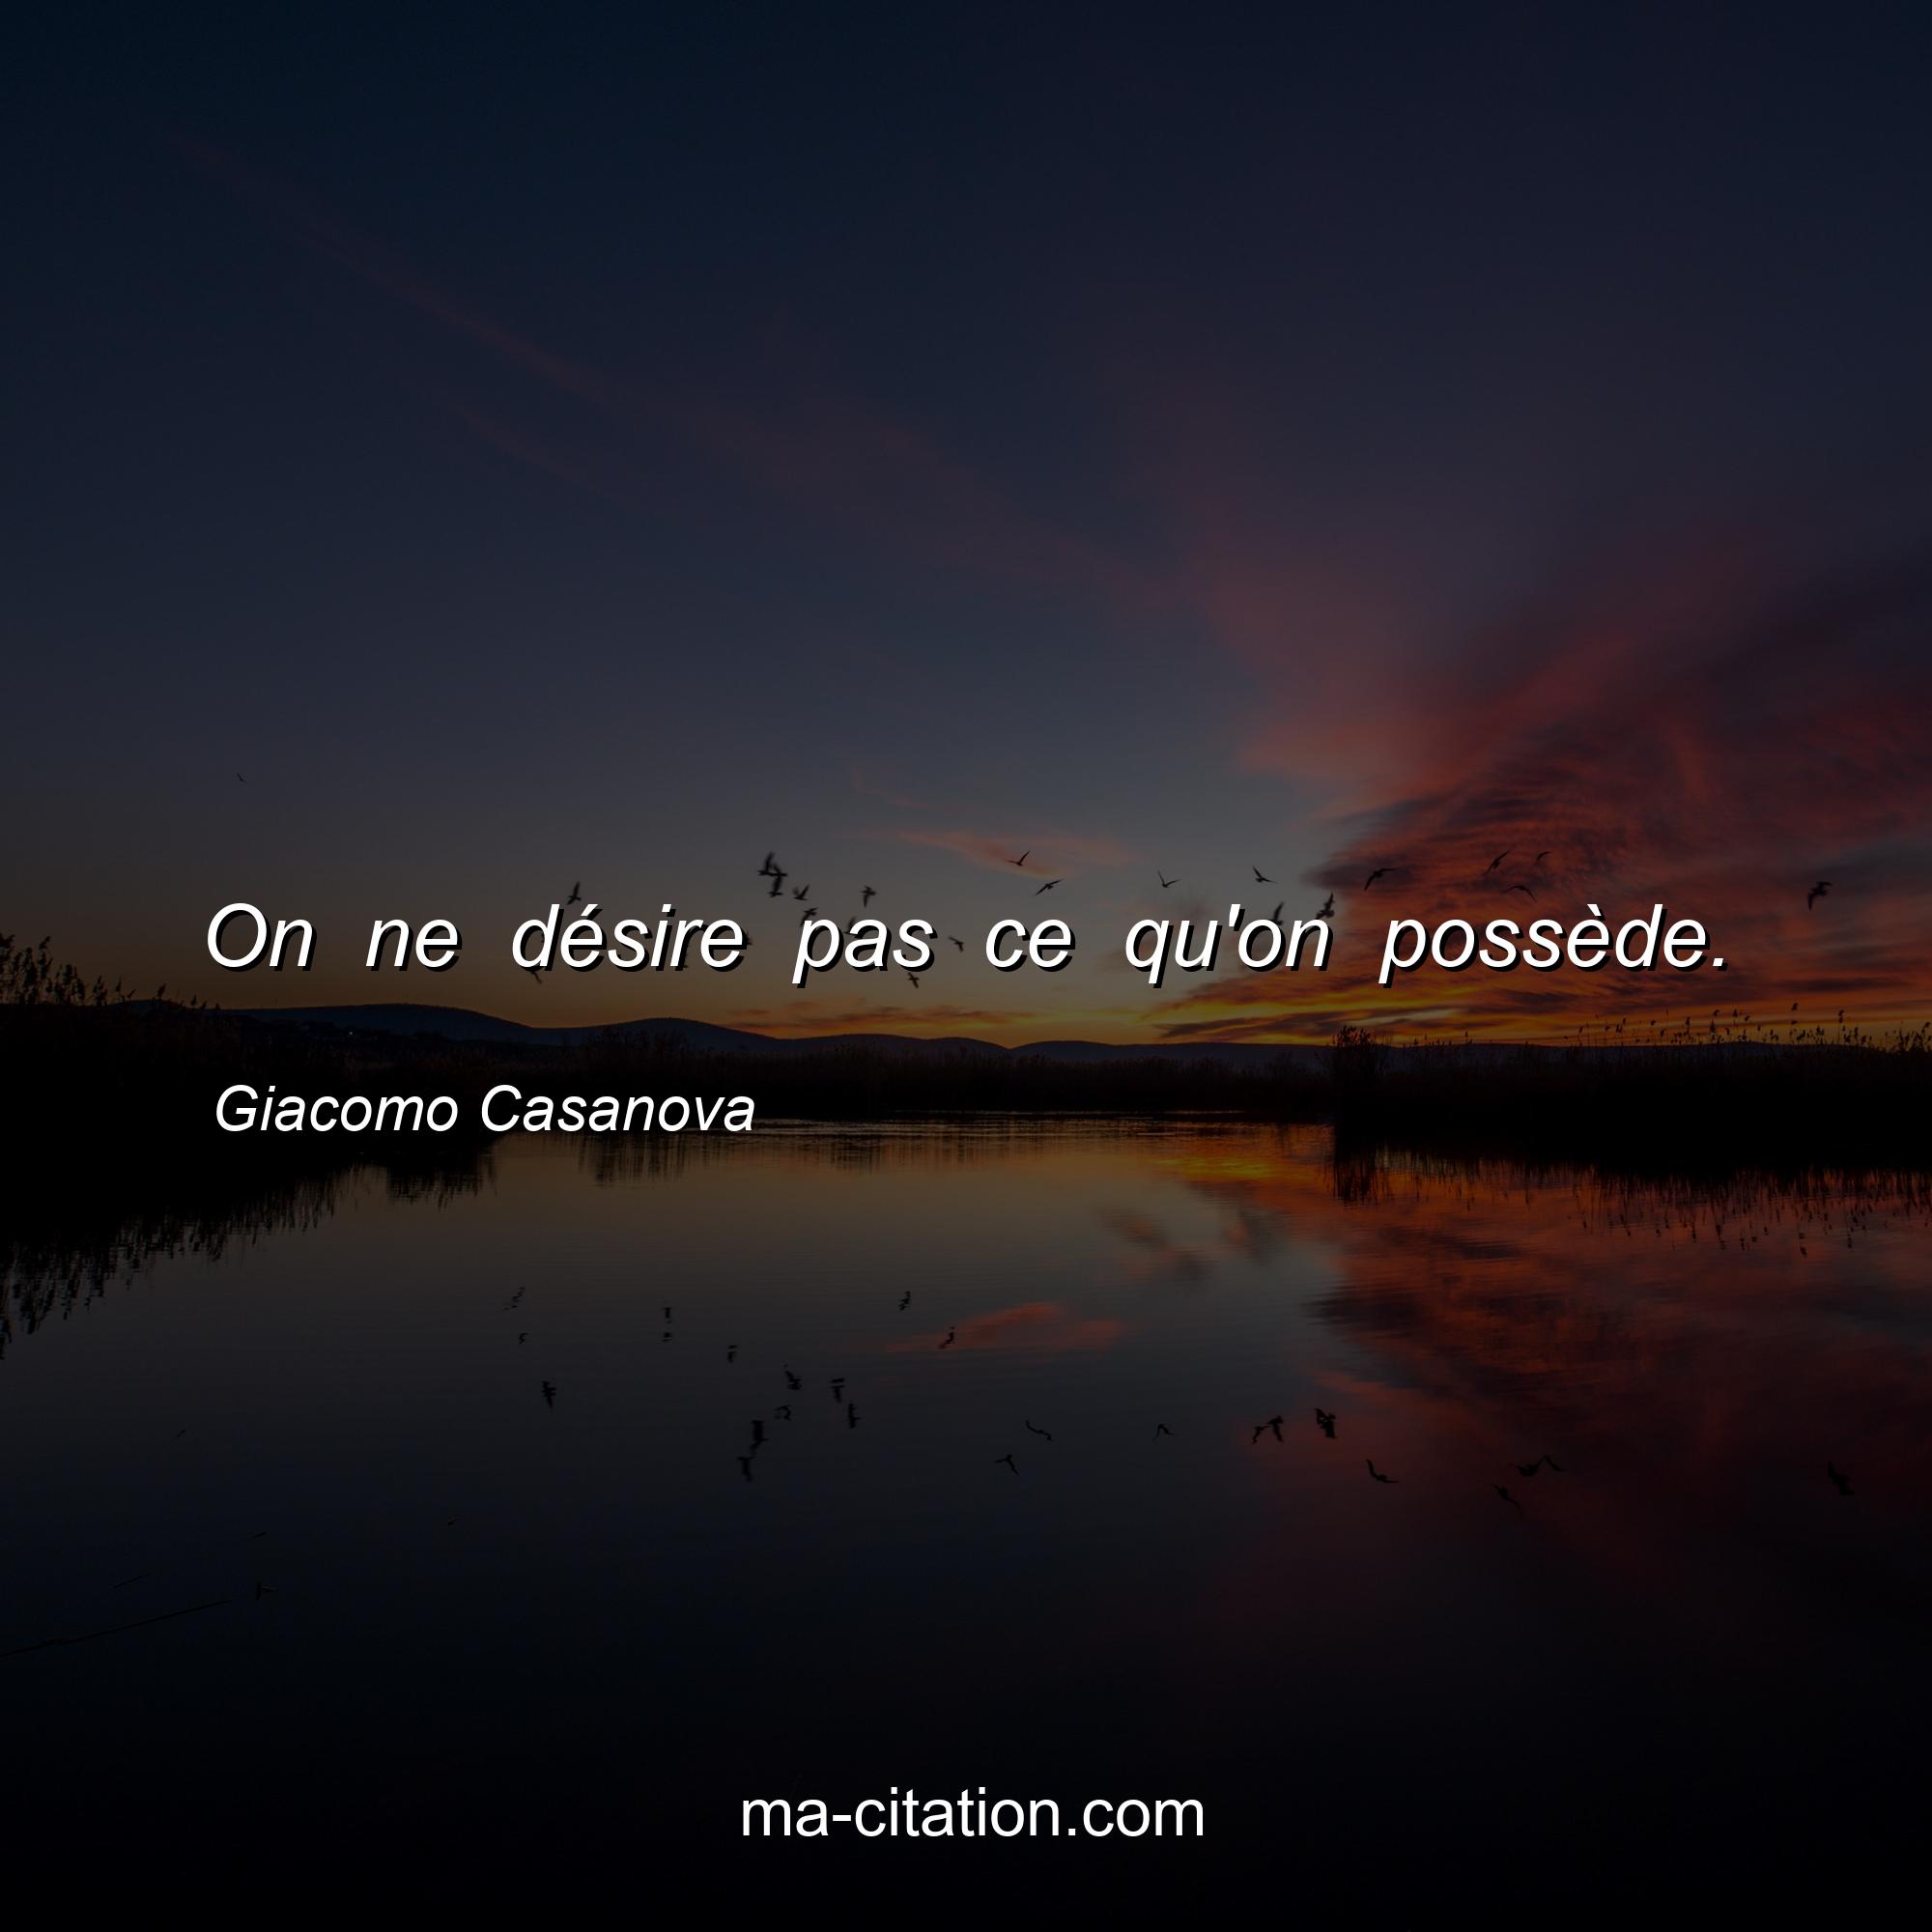 Giacomo Casanova : On ne désire pas ce qu'on possède.